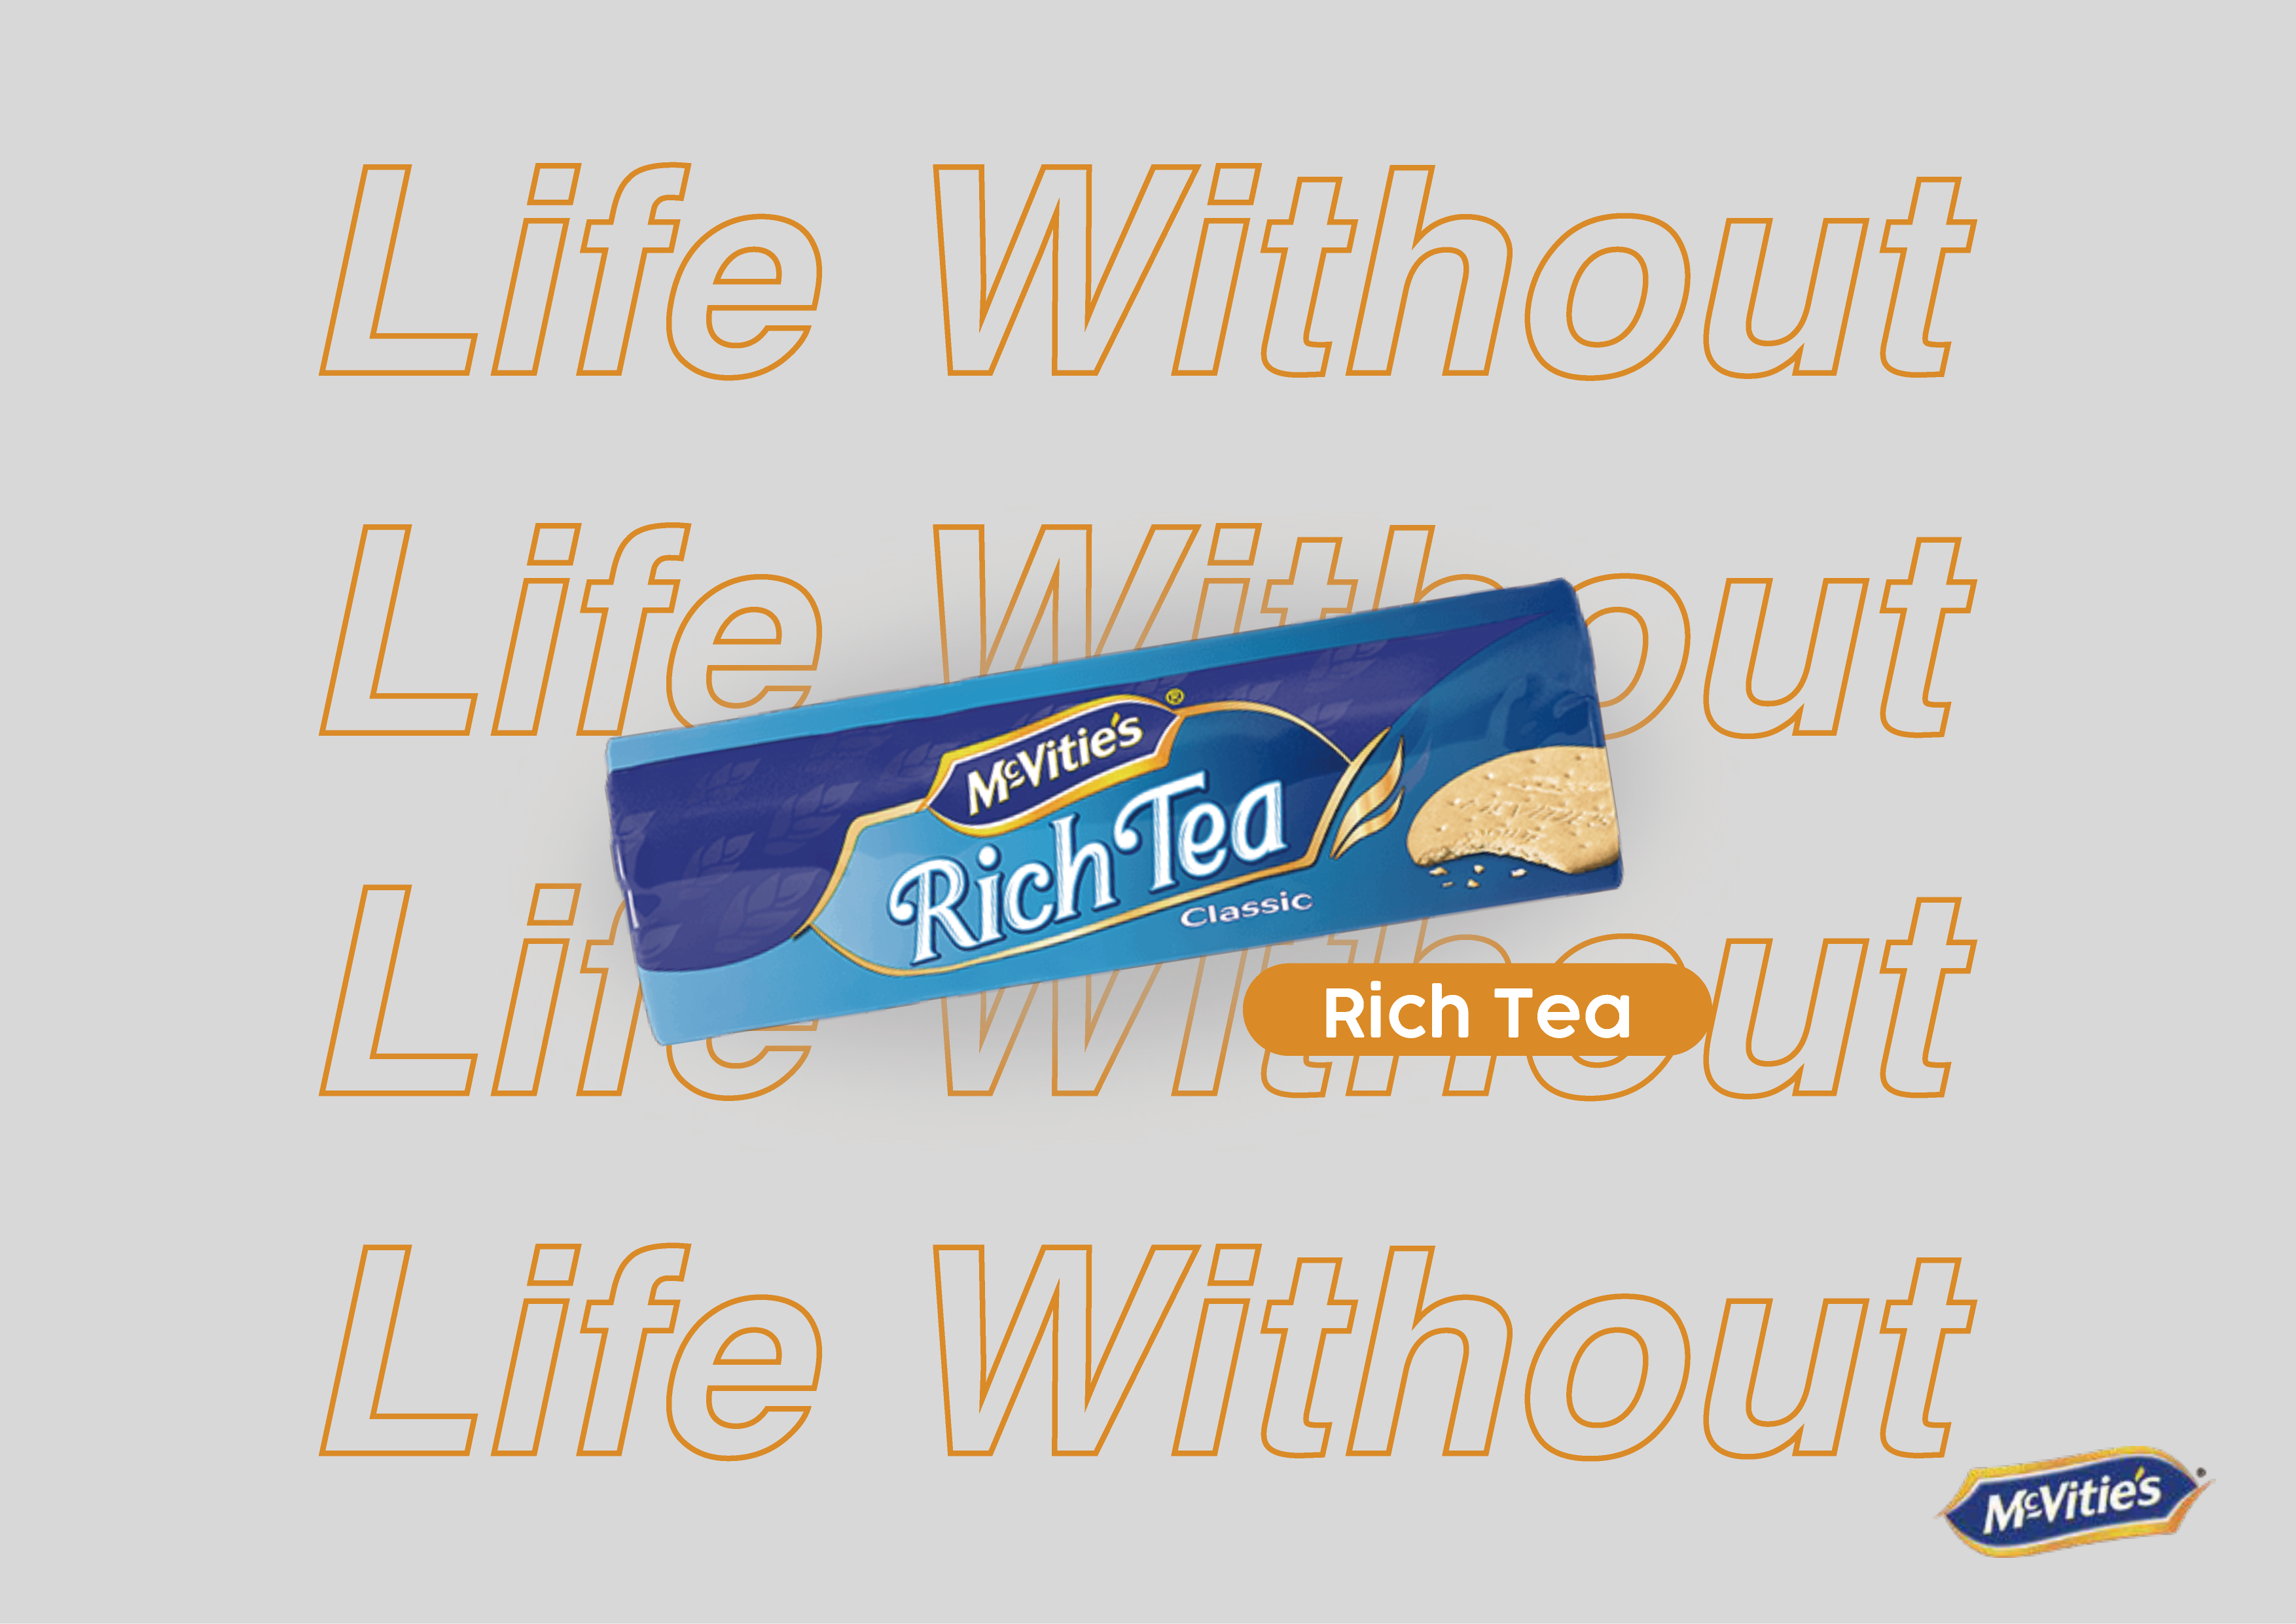 life without tea